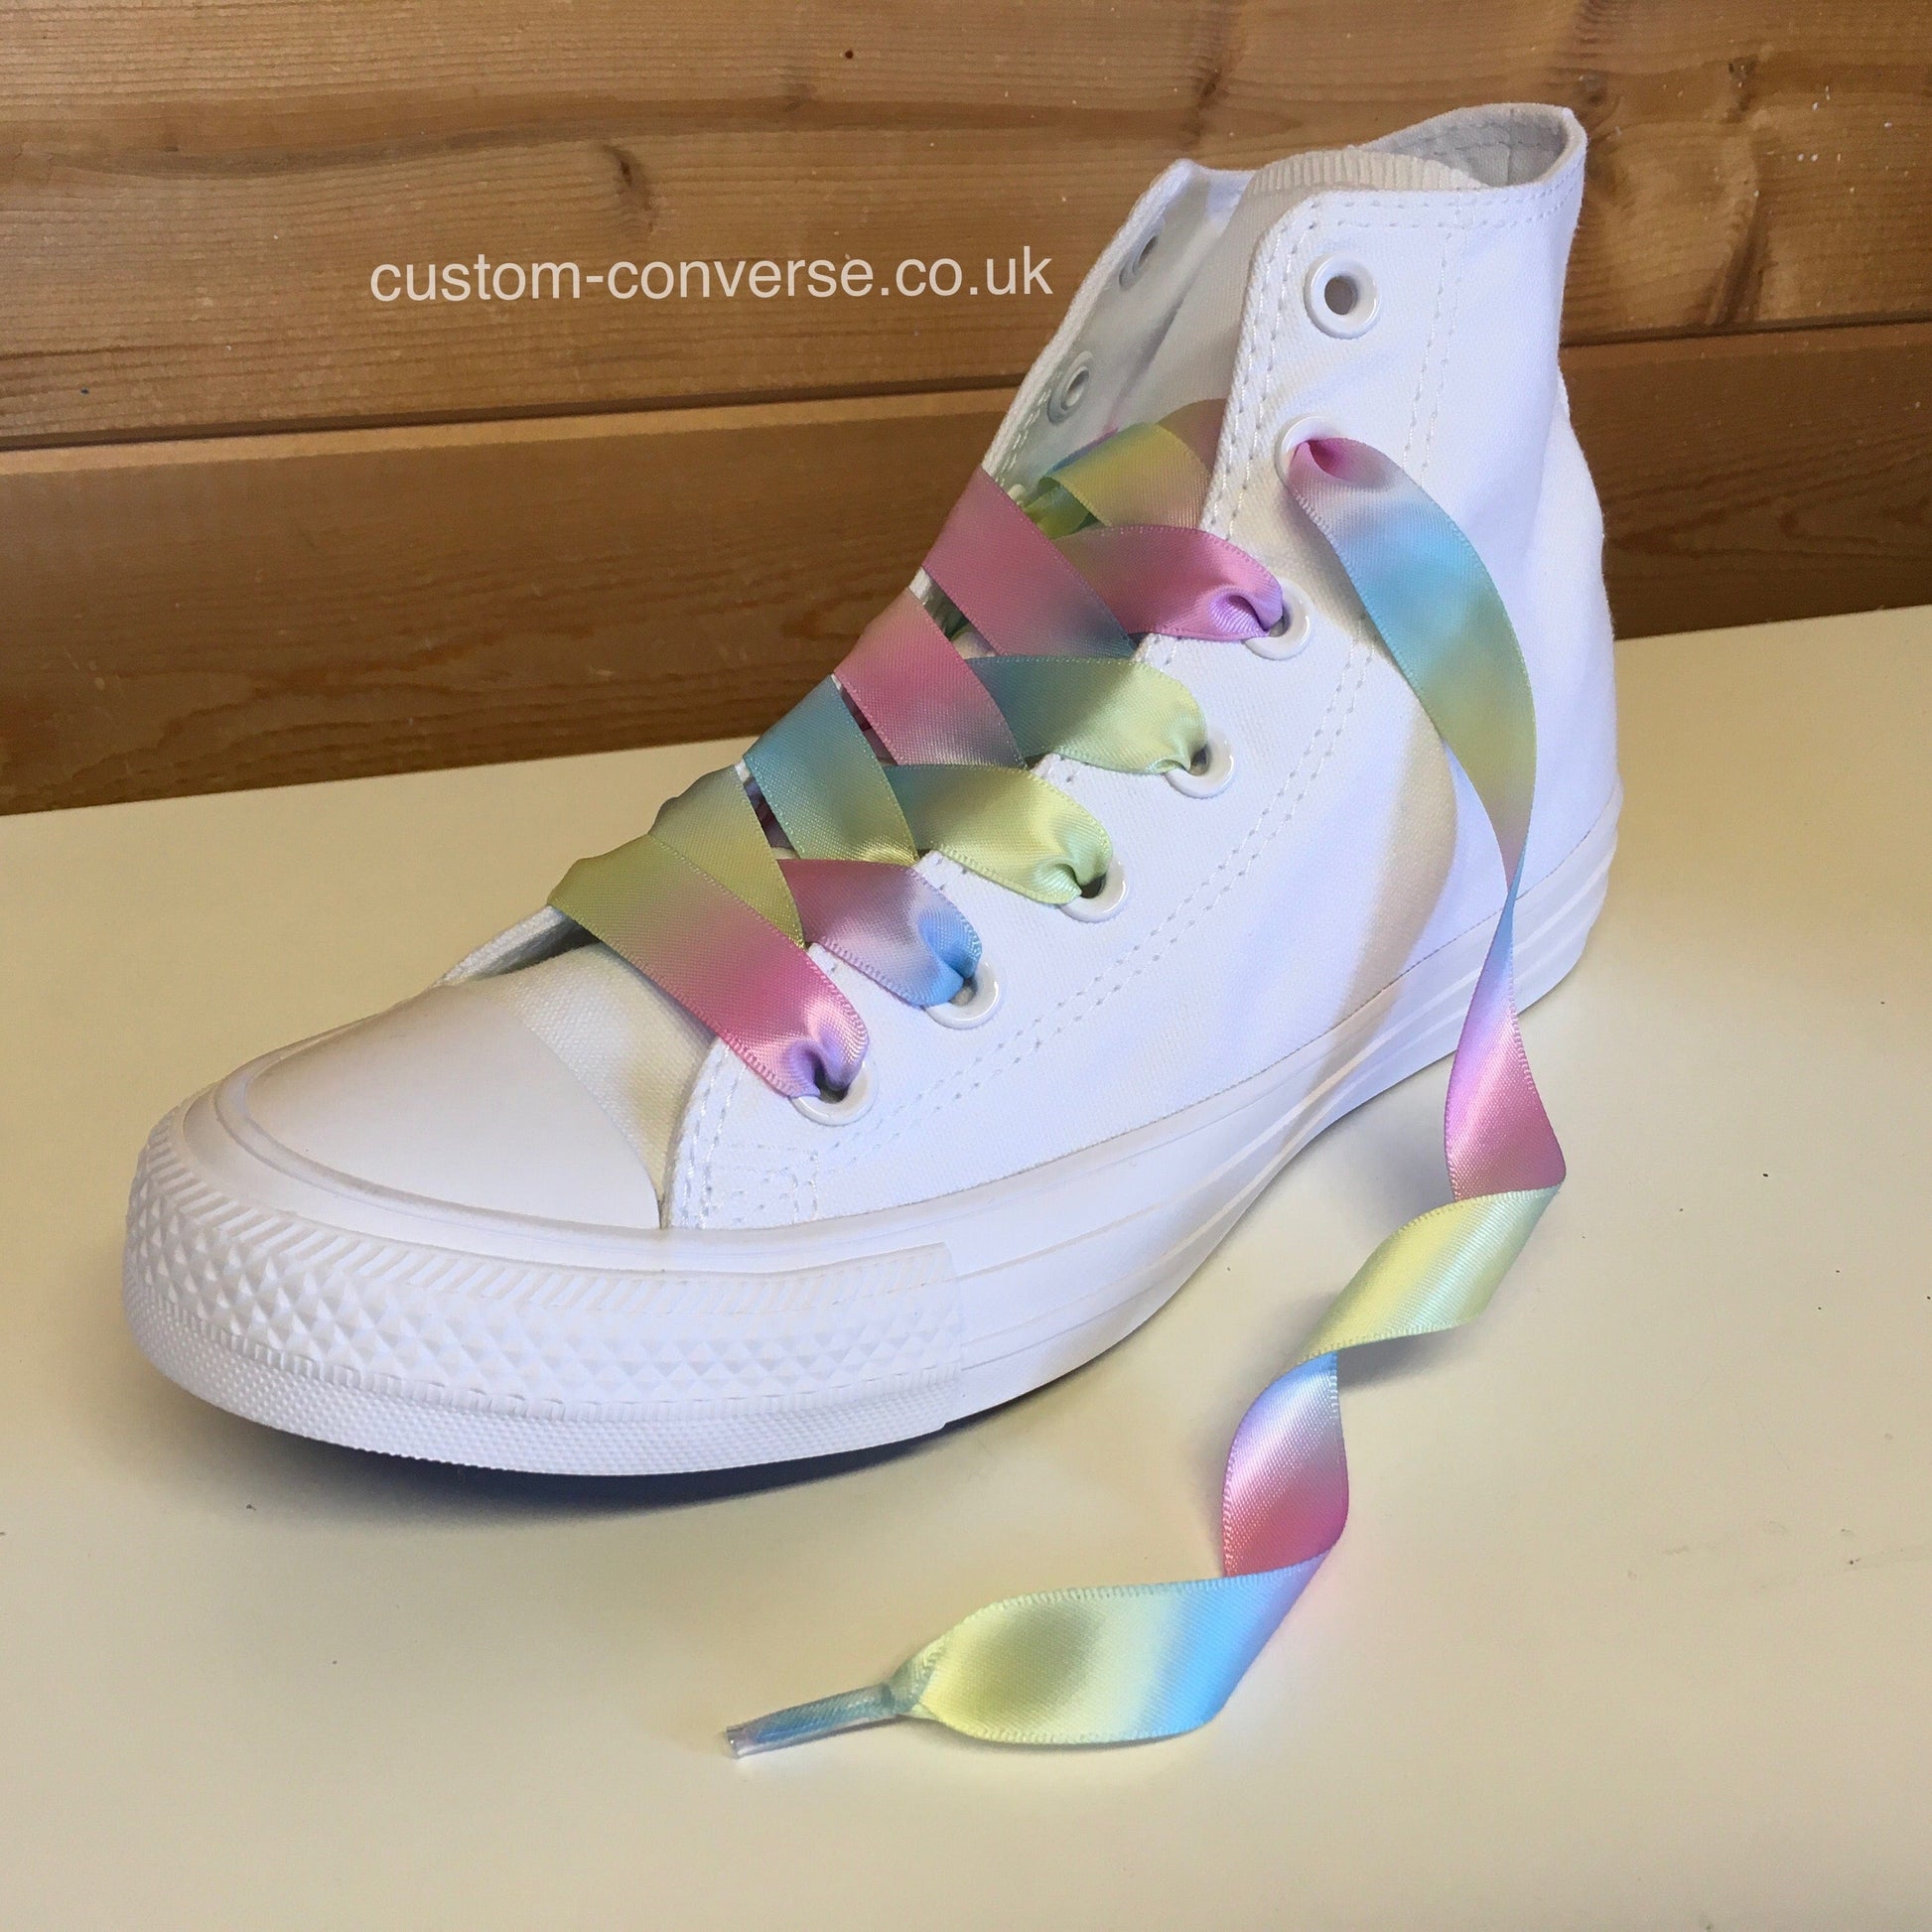 Custom Converse Ltd. Other Rainbow Ribbon Shoelaces